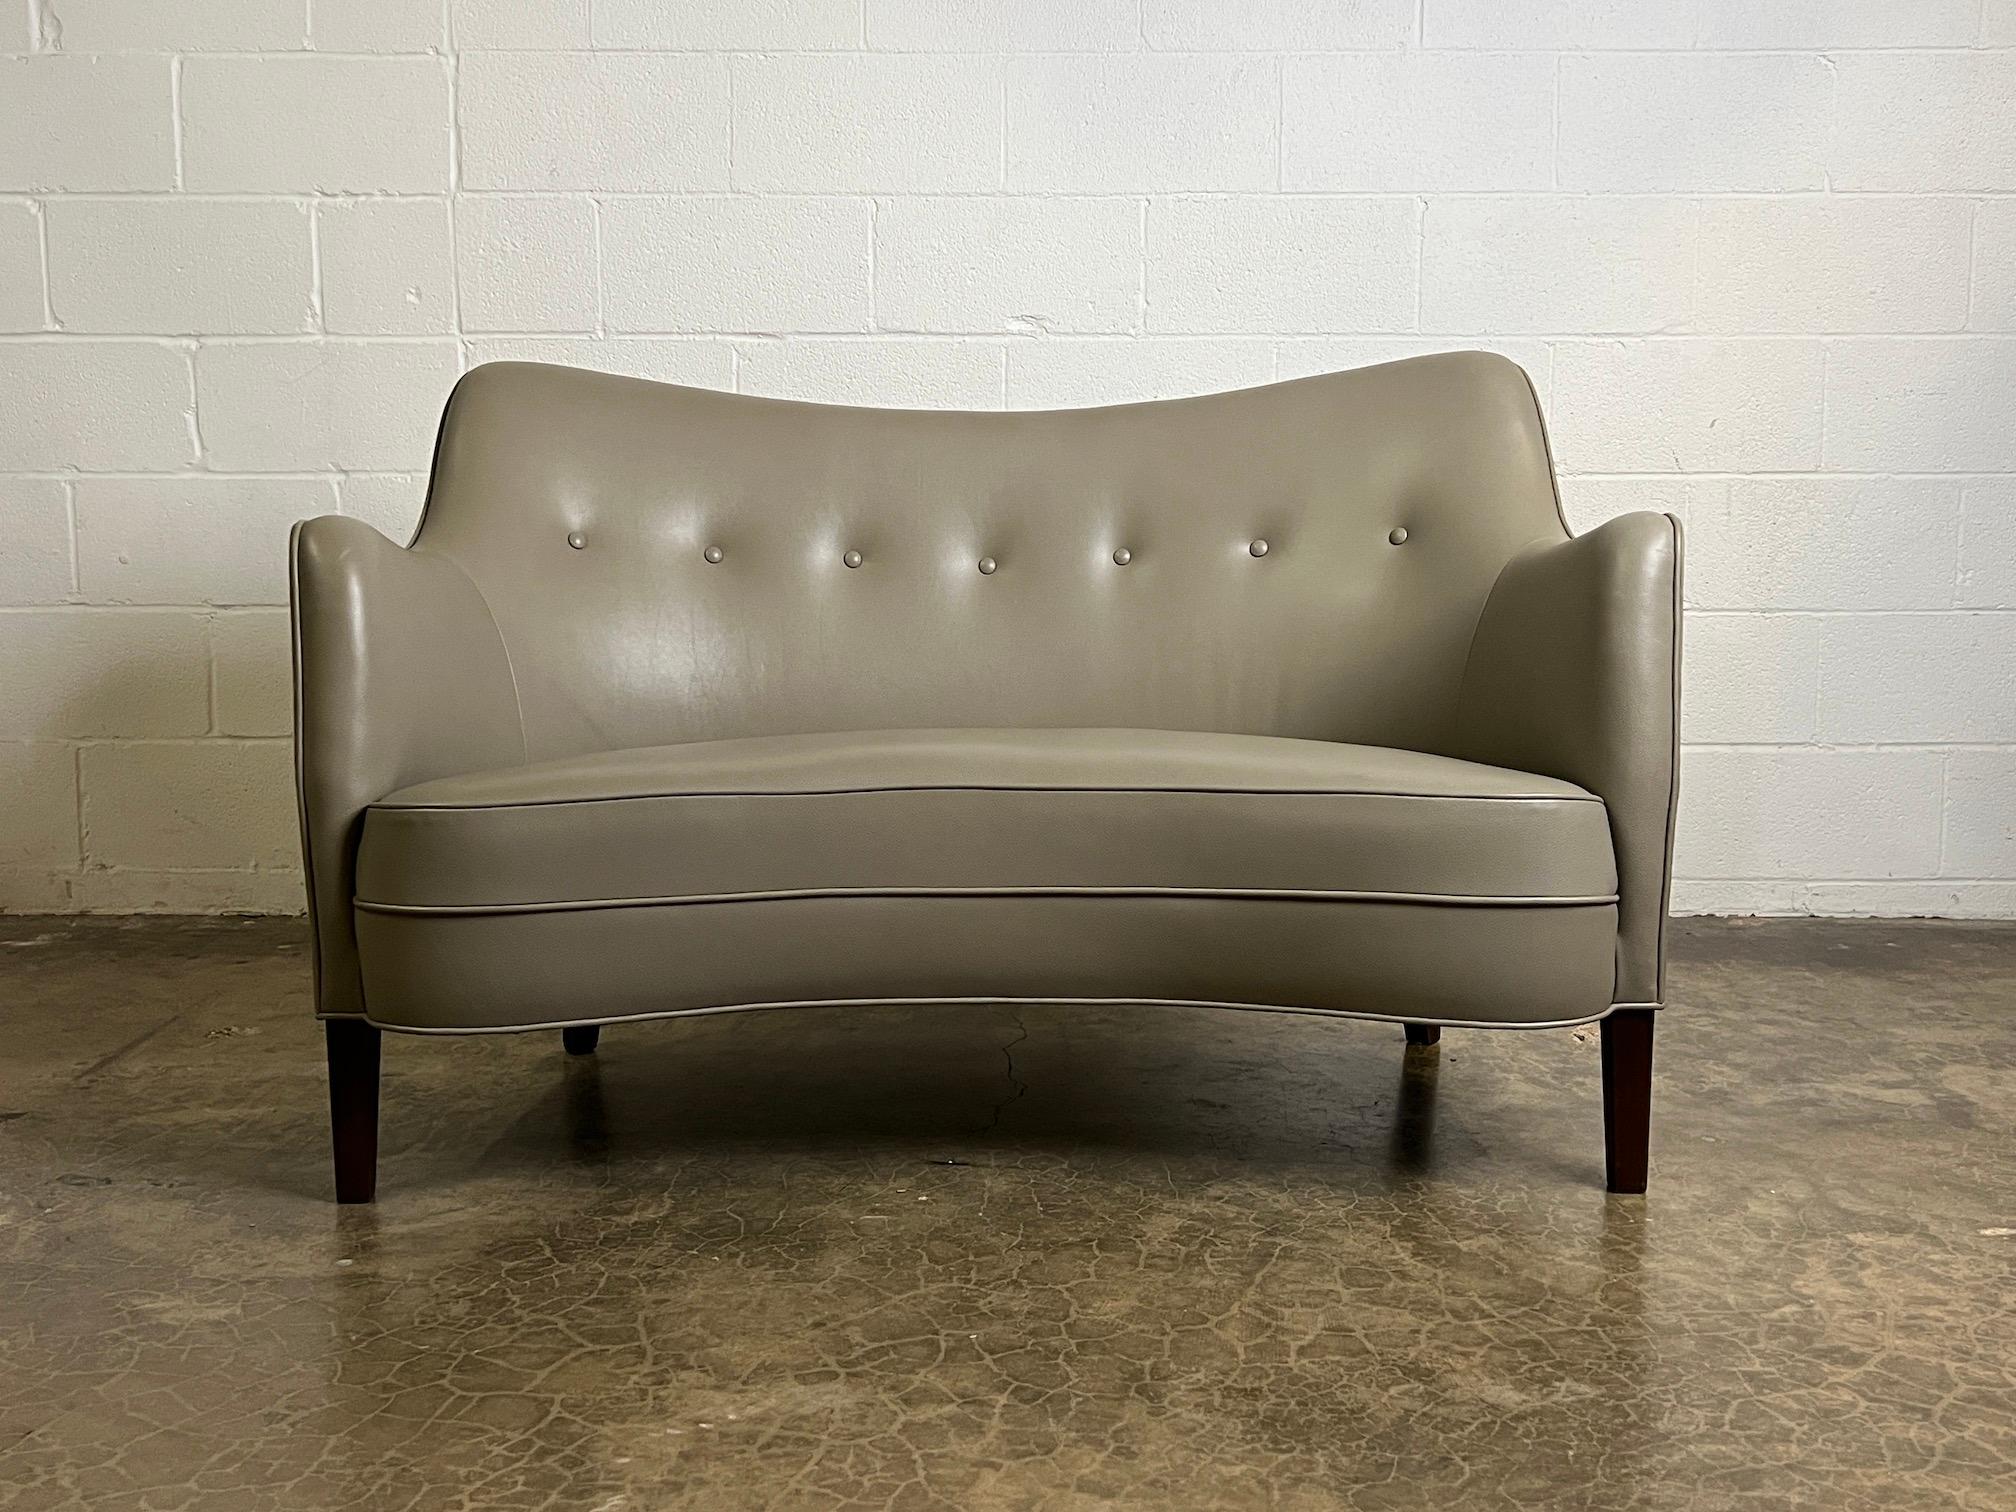 A leather Alle sofa designed by Nanna Ditzel for S.C. Sorensen, Denmark.